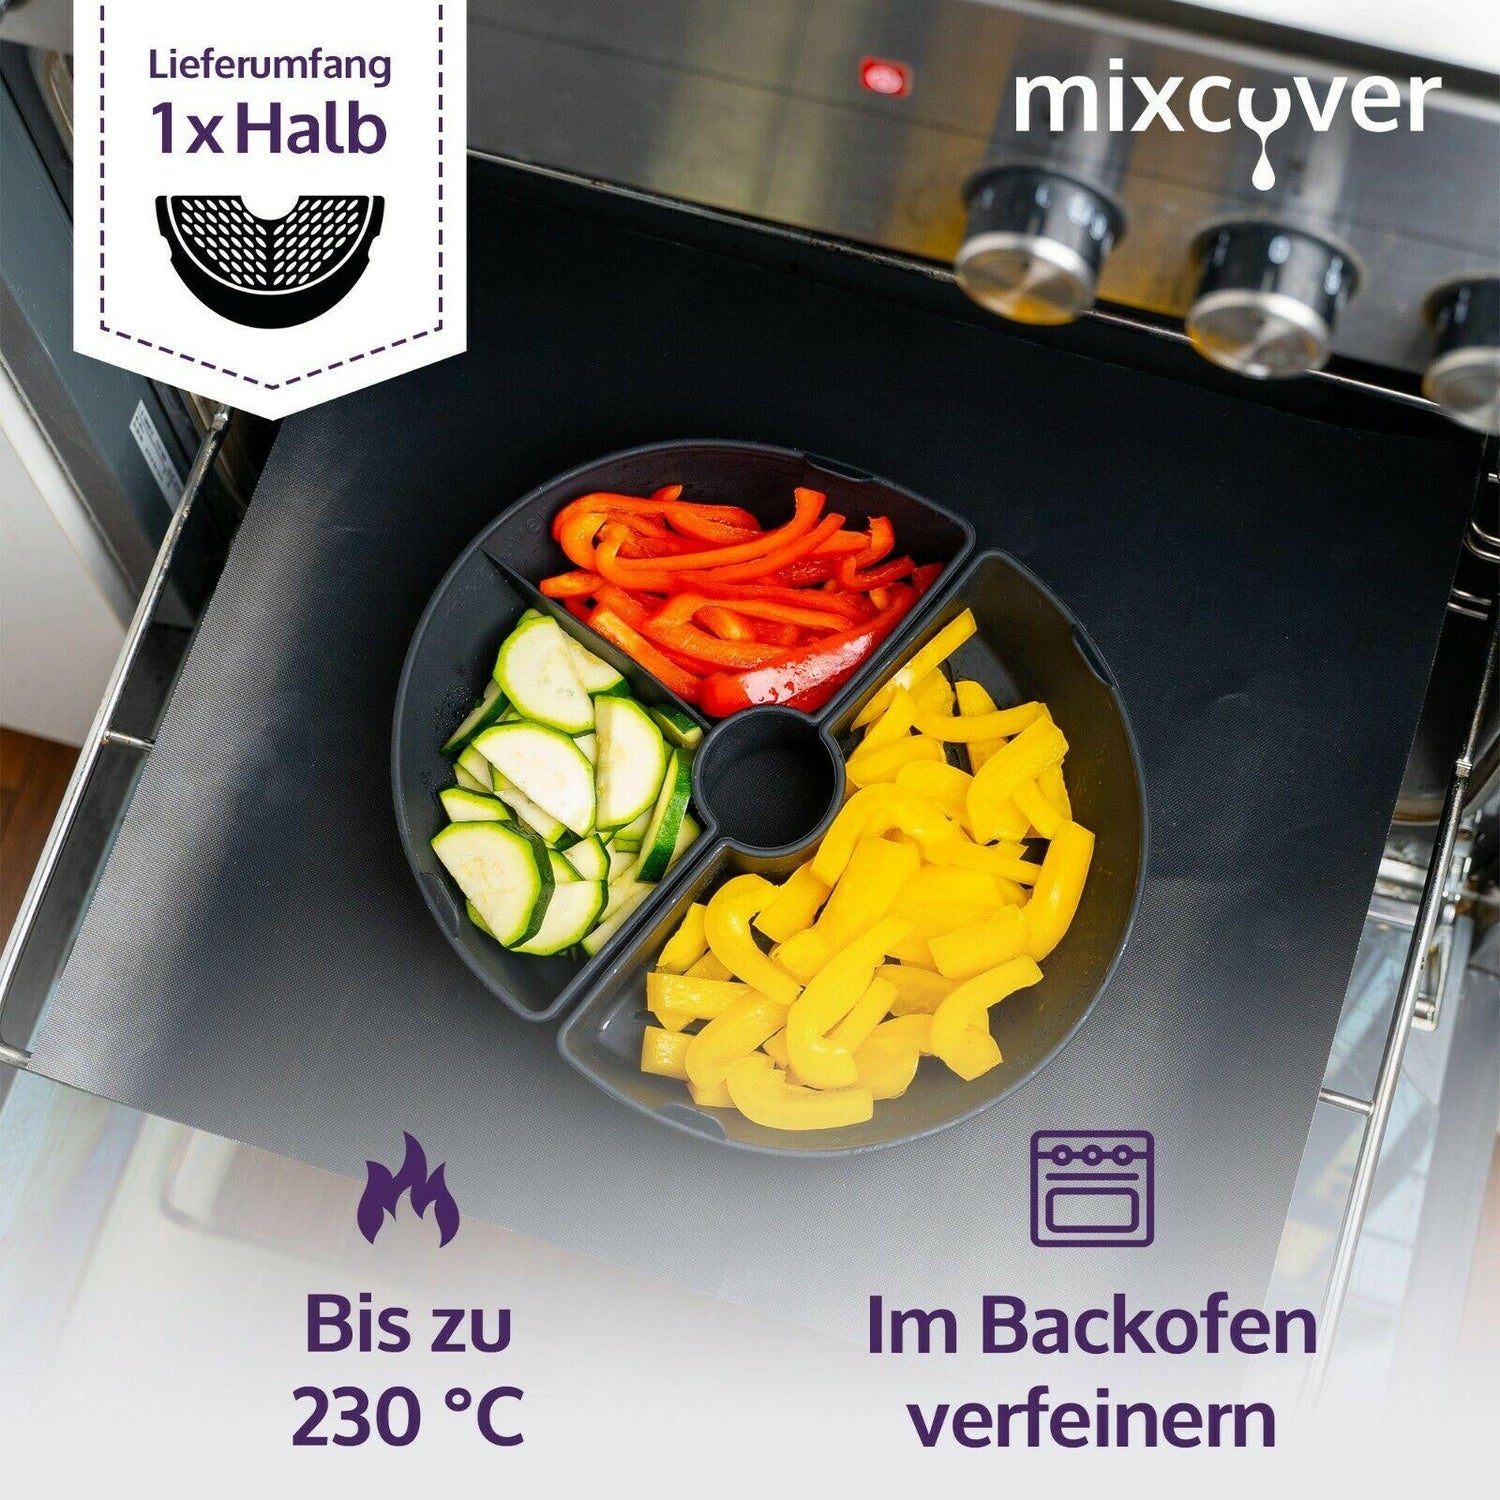 B-Ware: Garraumteiler (HALB) für Thermomix Varoma Dampfgarraum - Mixcover - Mixcover